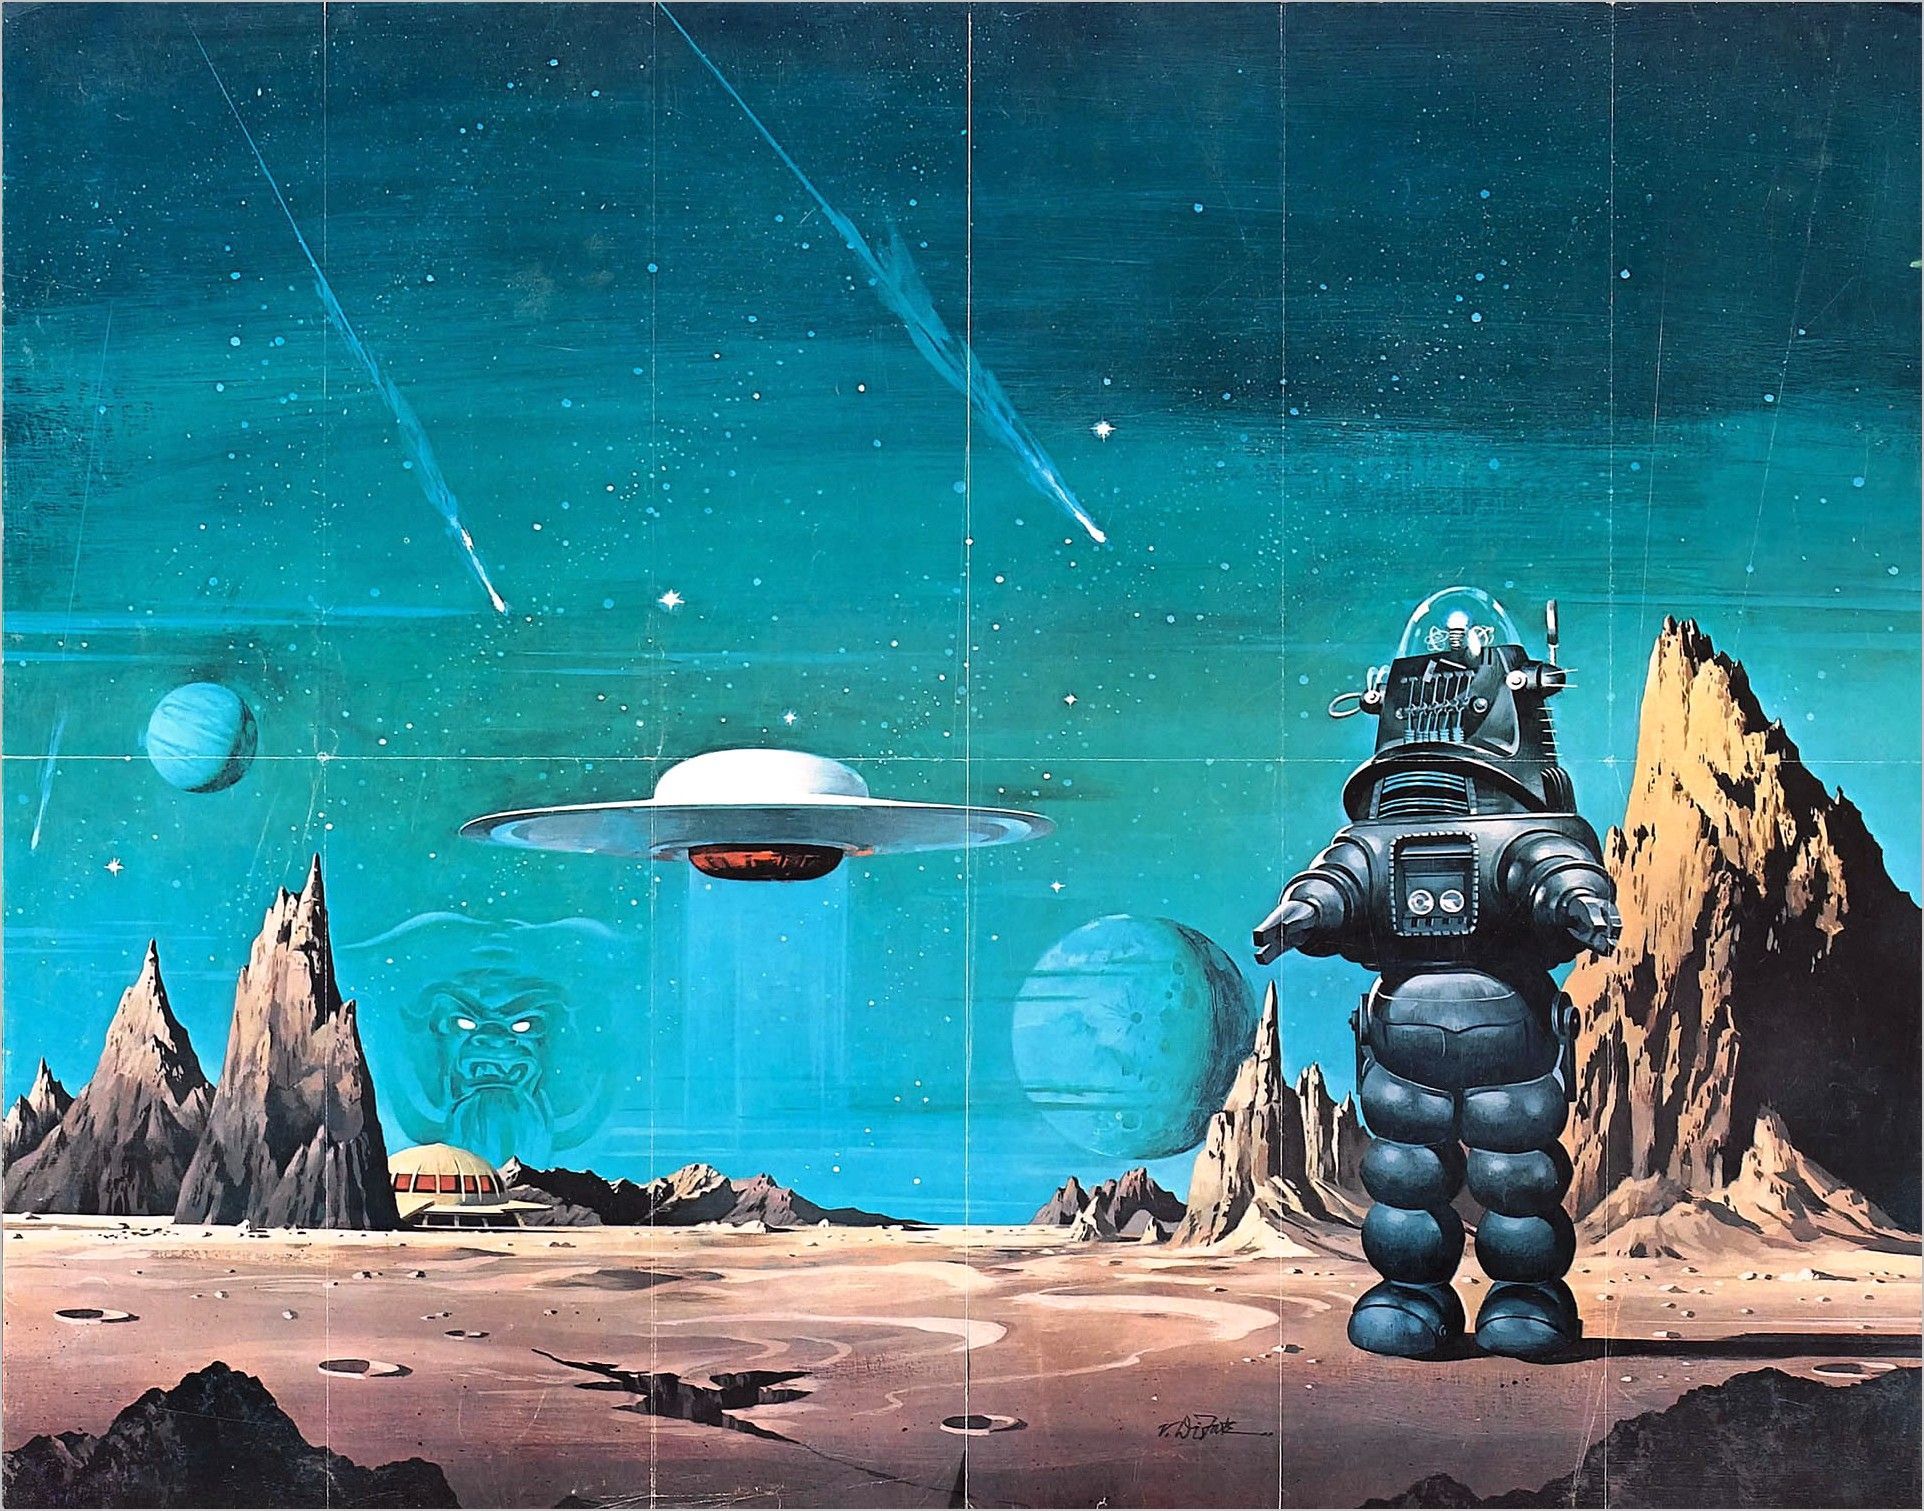 Vintage Sci Fi Wallpaper 4k. Sci fi wallpaper, Planet poster, Retro futurism